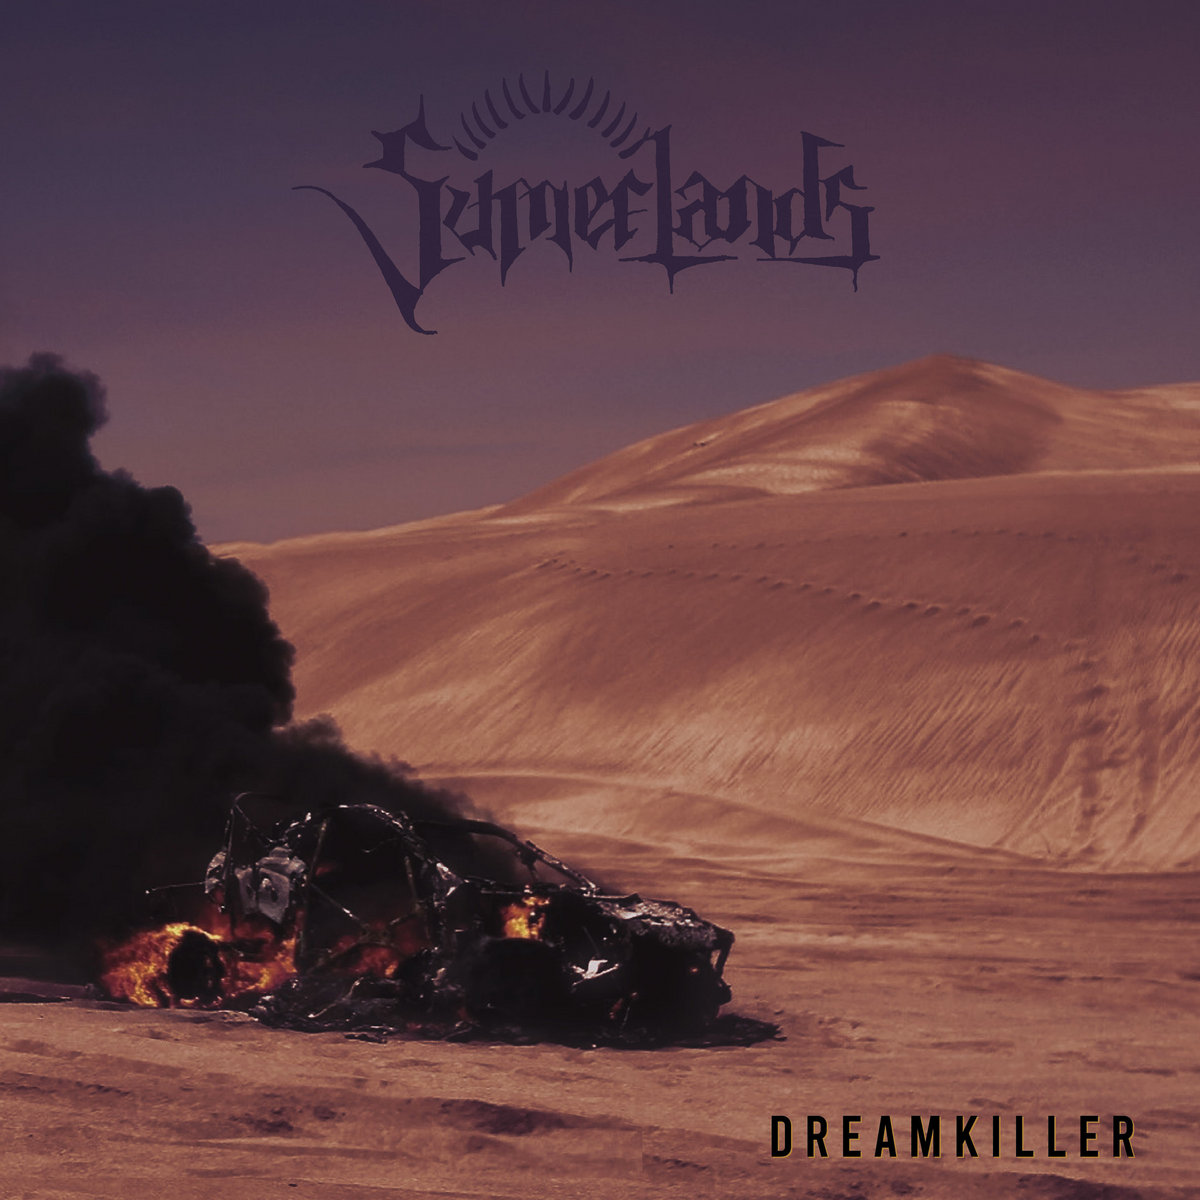 Sumerlands - "Dreamkiller" - 2022